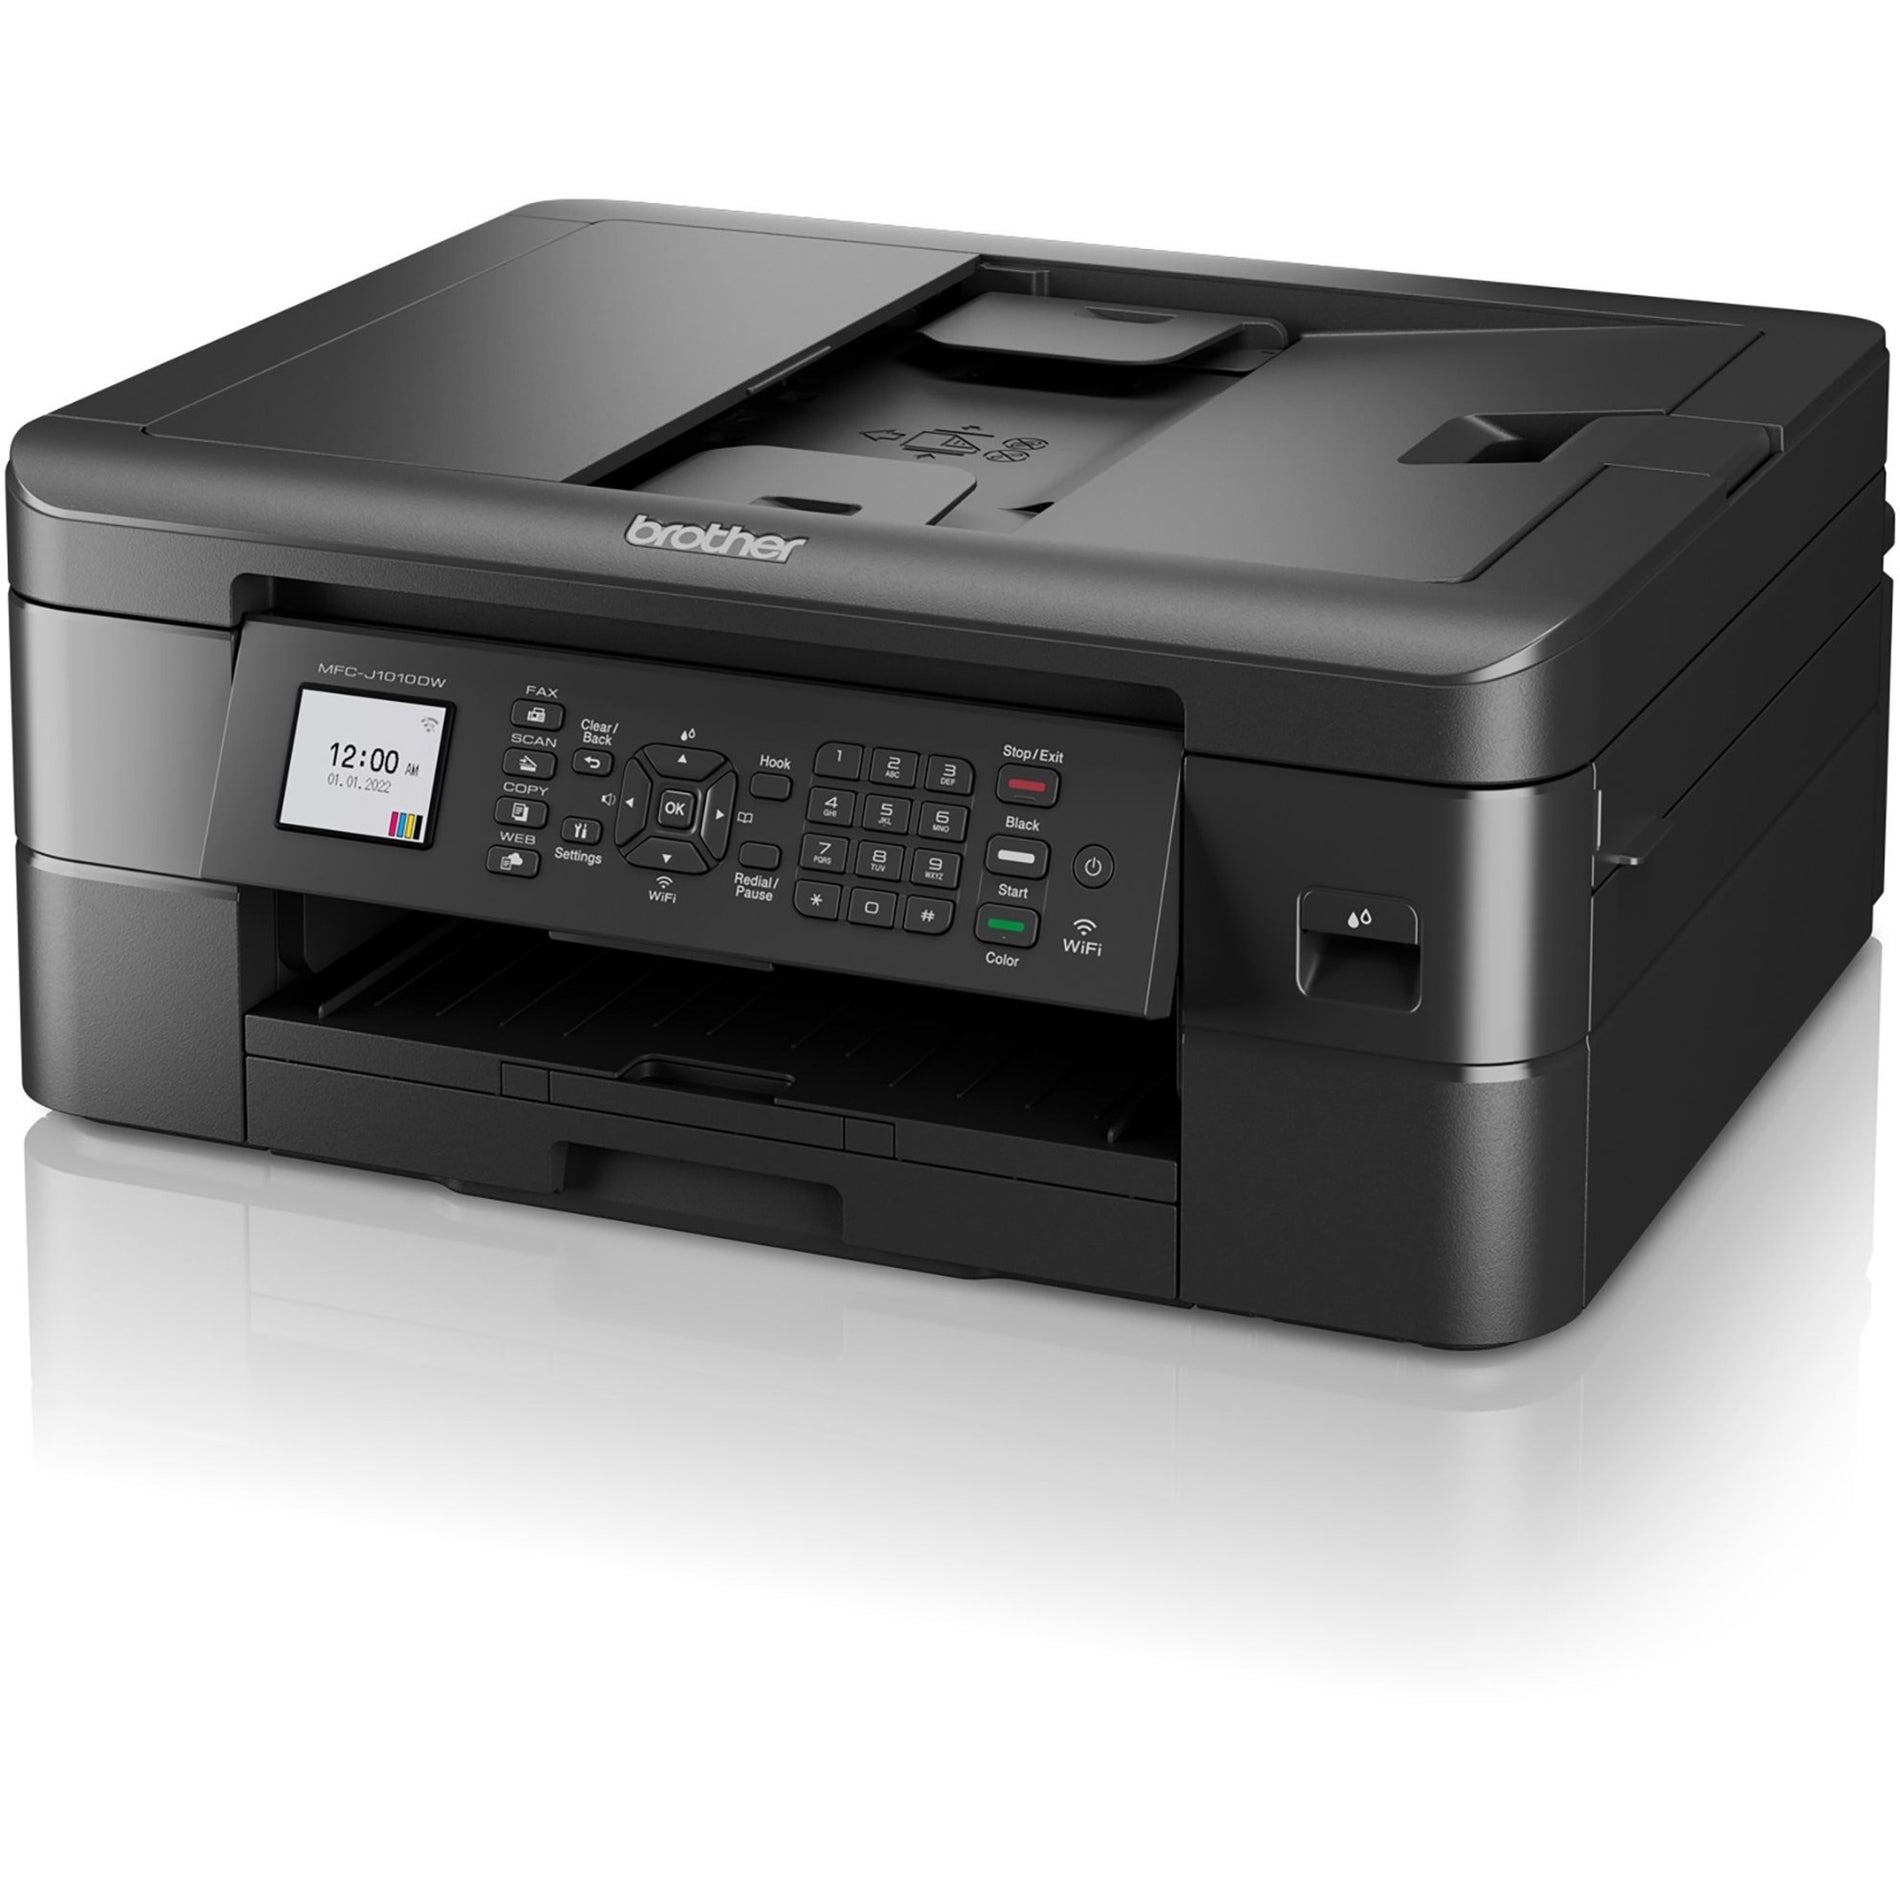 Brother MFC-J1010DW Inkjet Printer, Color, Wireless, Automatic Duplex Printing